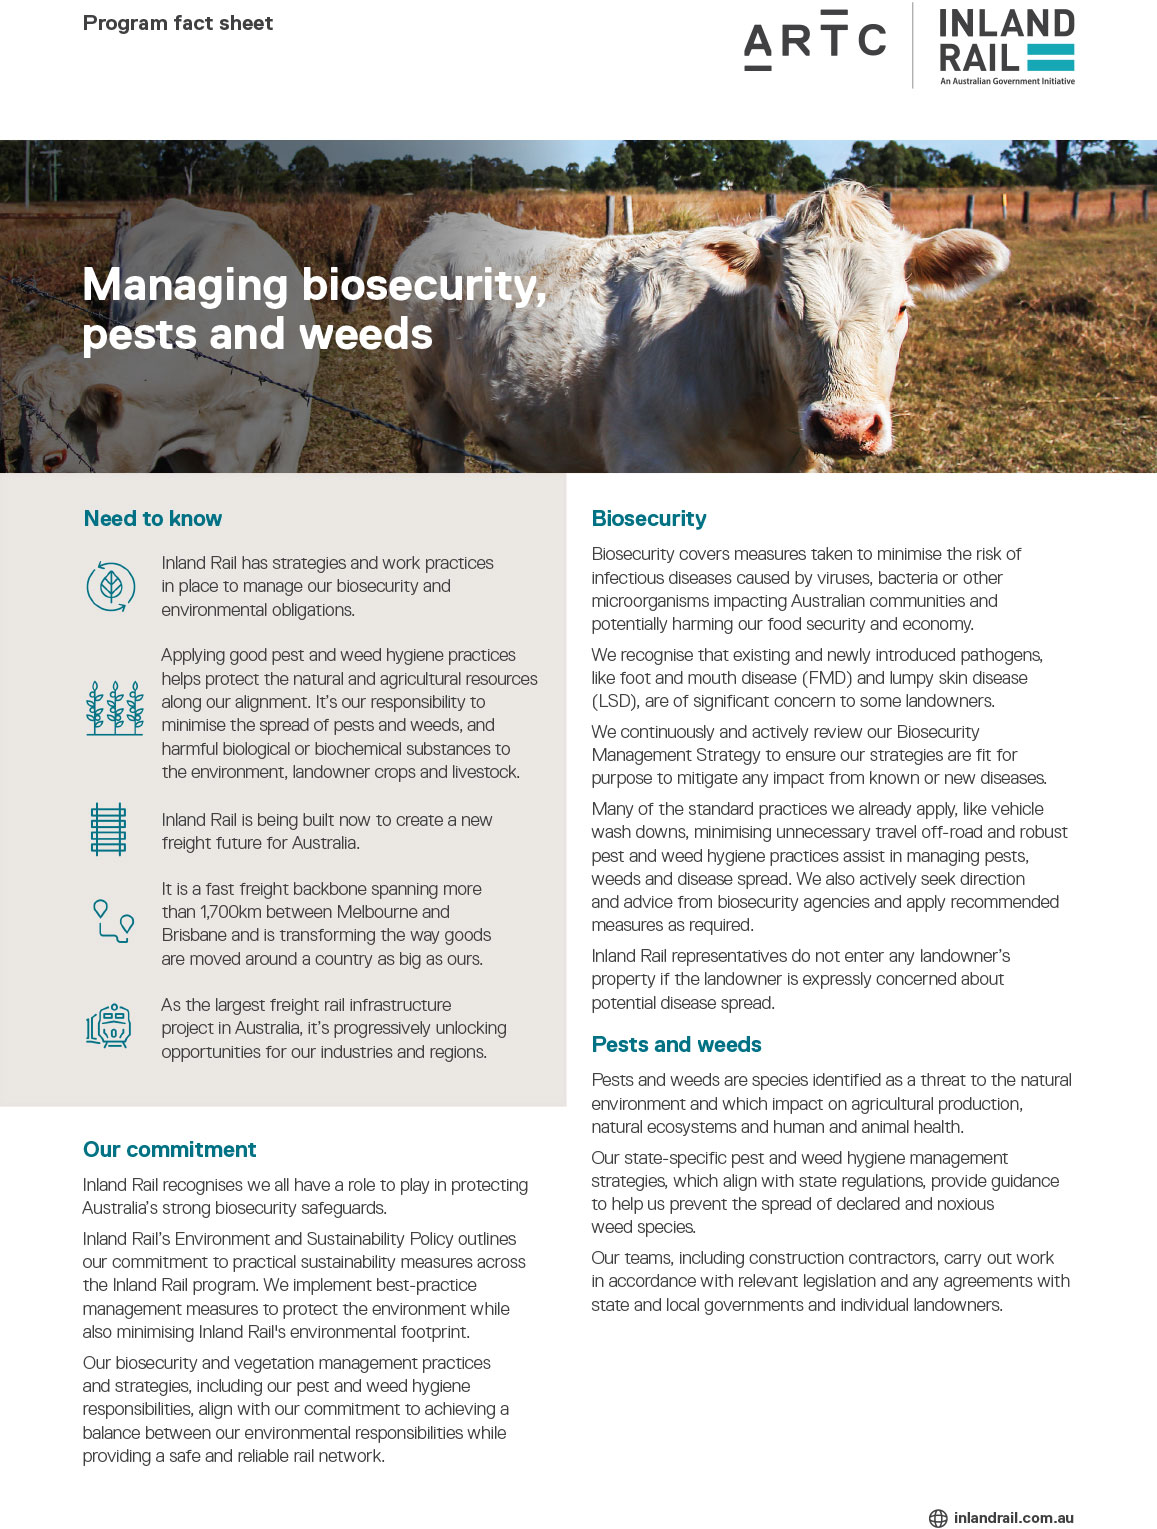 Image thumbnail for Managing biosecurity, pests and weeds fact sheet fact sheet